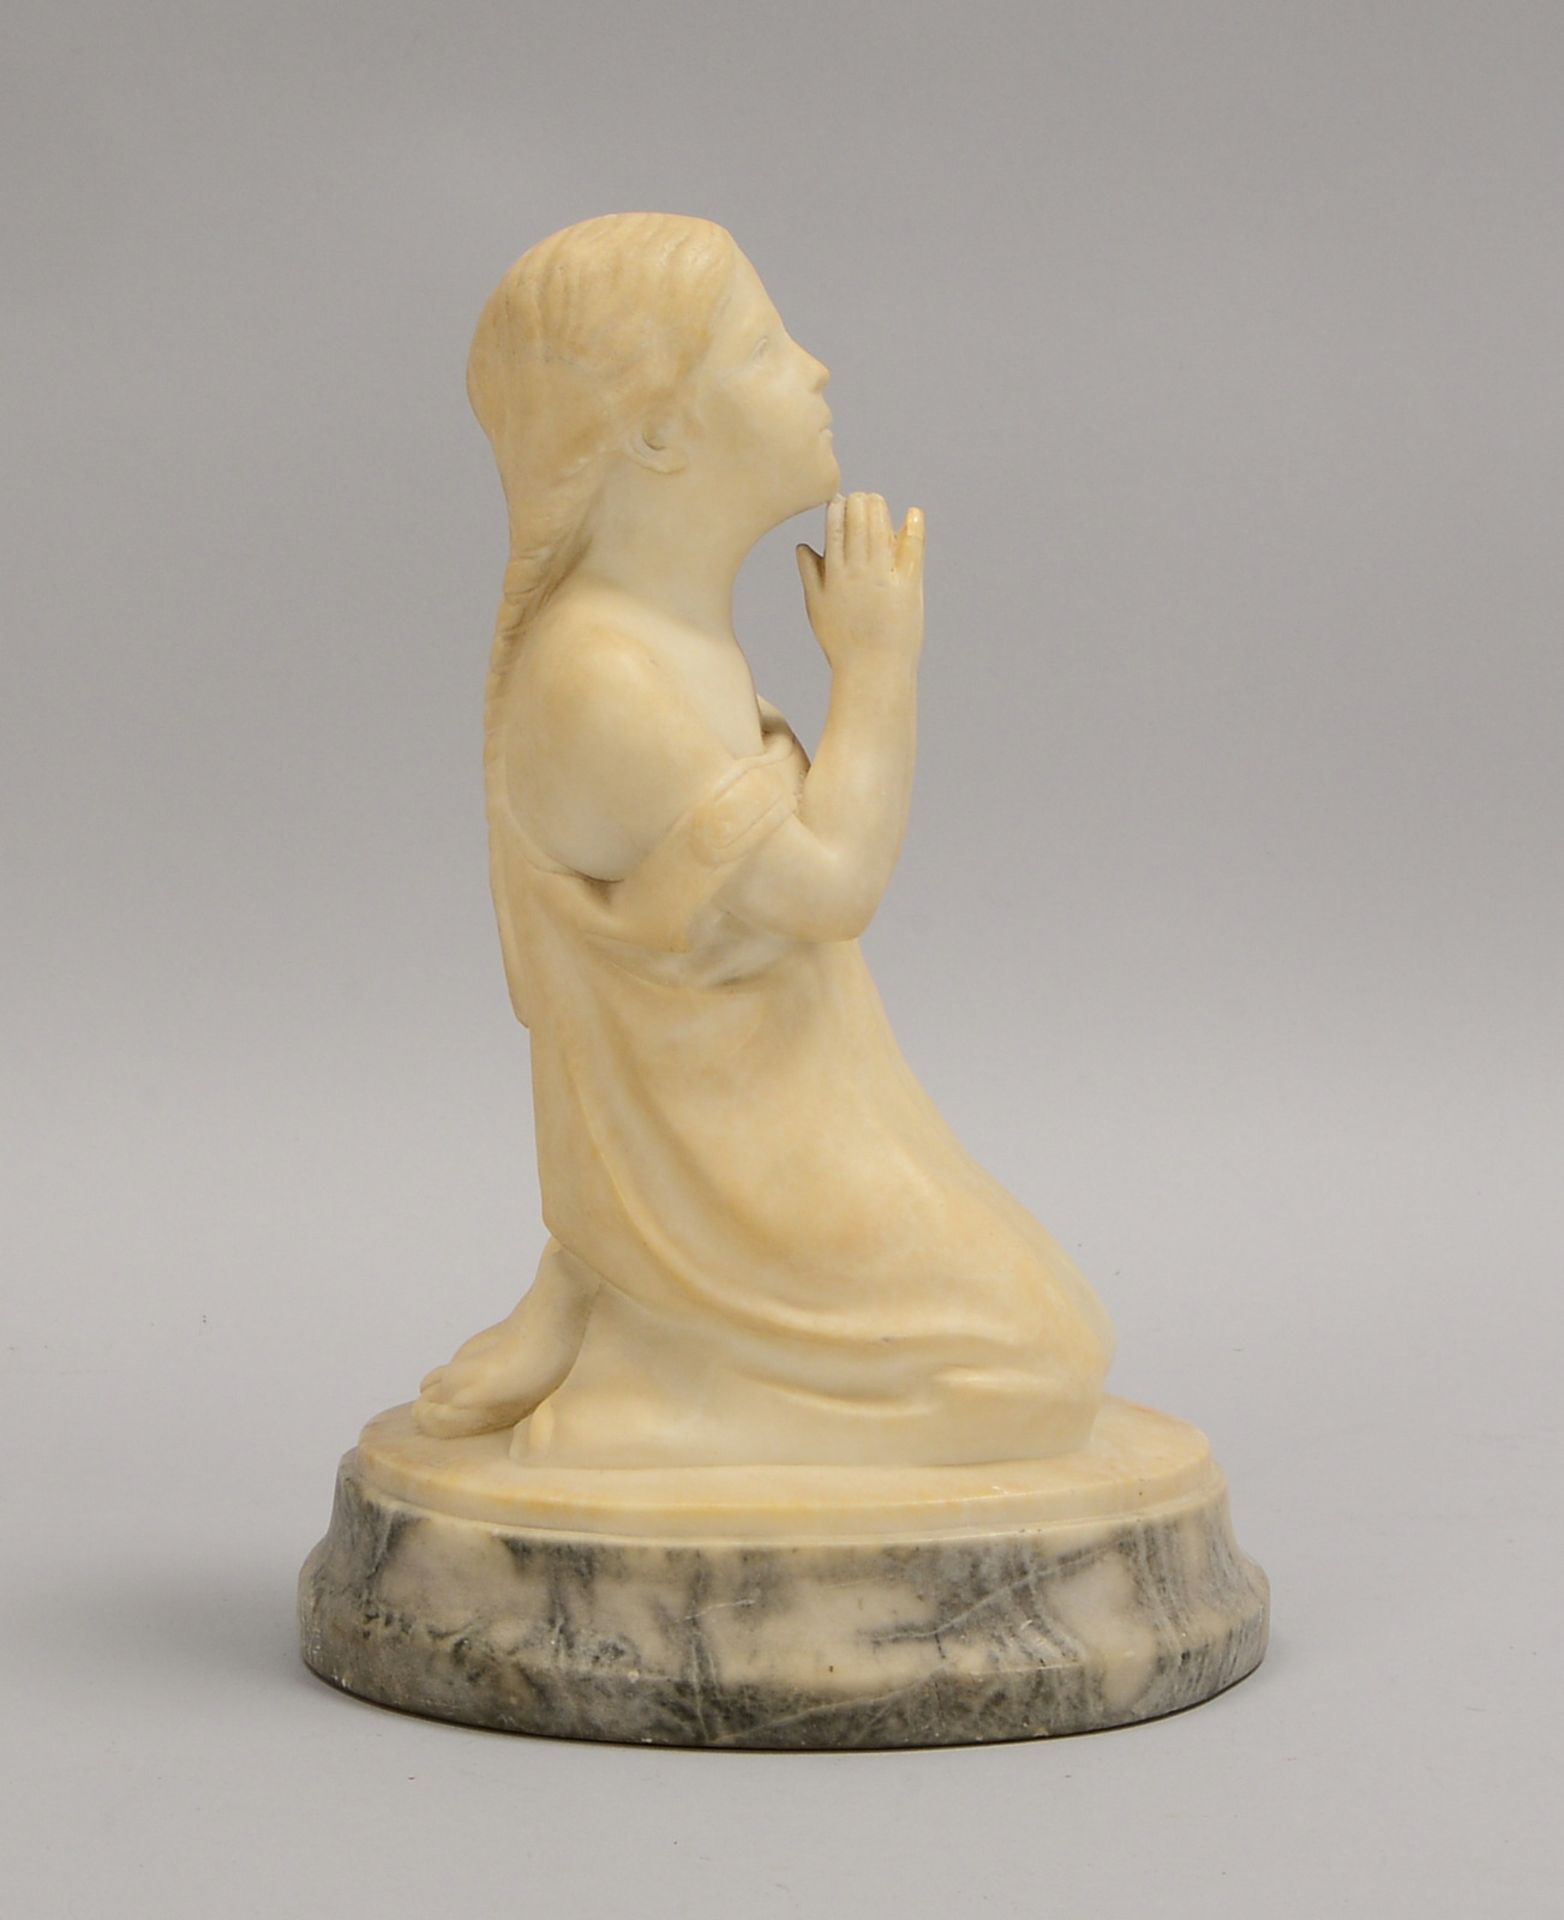 Felling, Alabaster-Skulptur, 'Betende', verso signiert, Figur auf Marmorsockel; Höhe 27 cm - Bild 3 aus 3